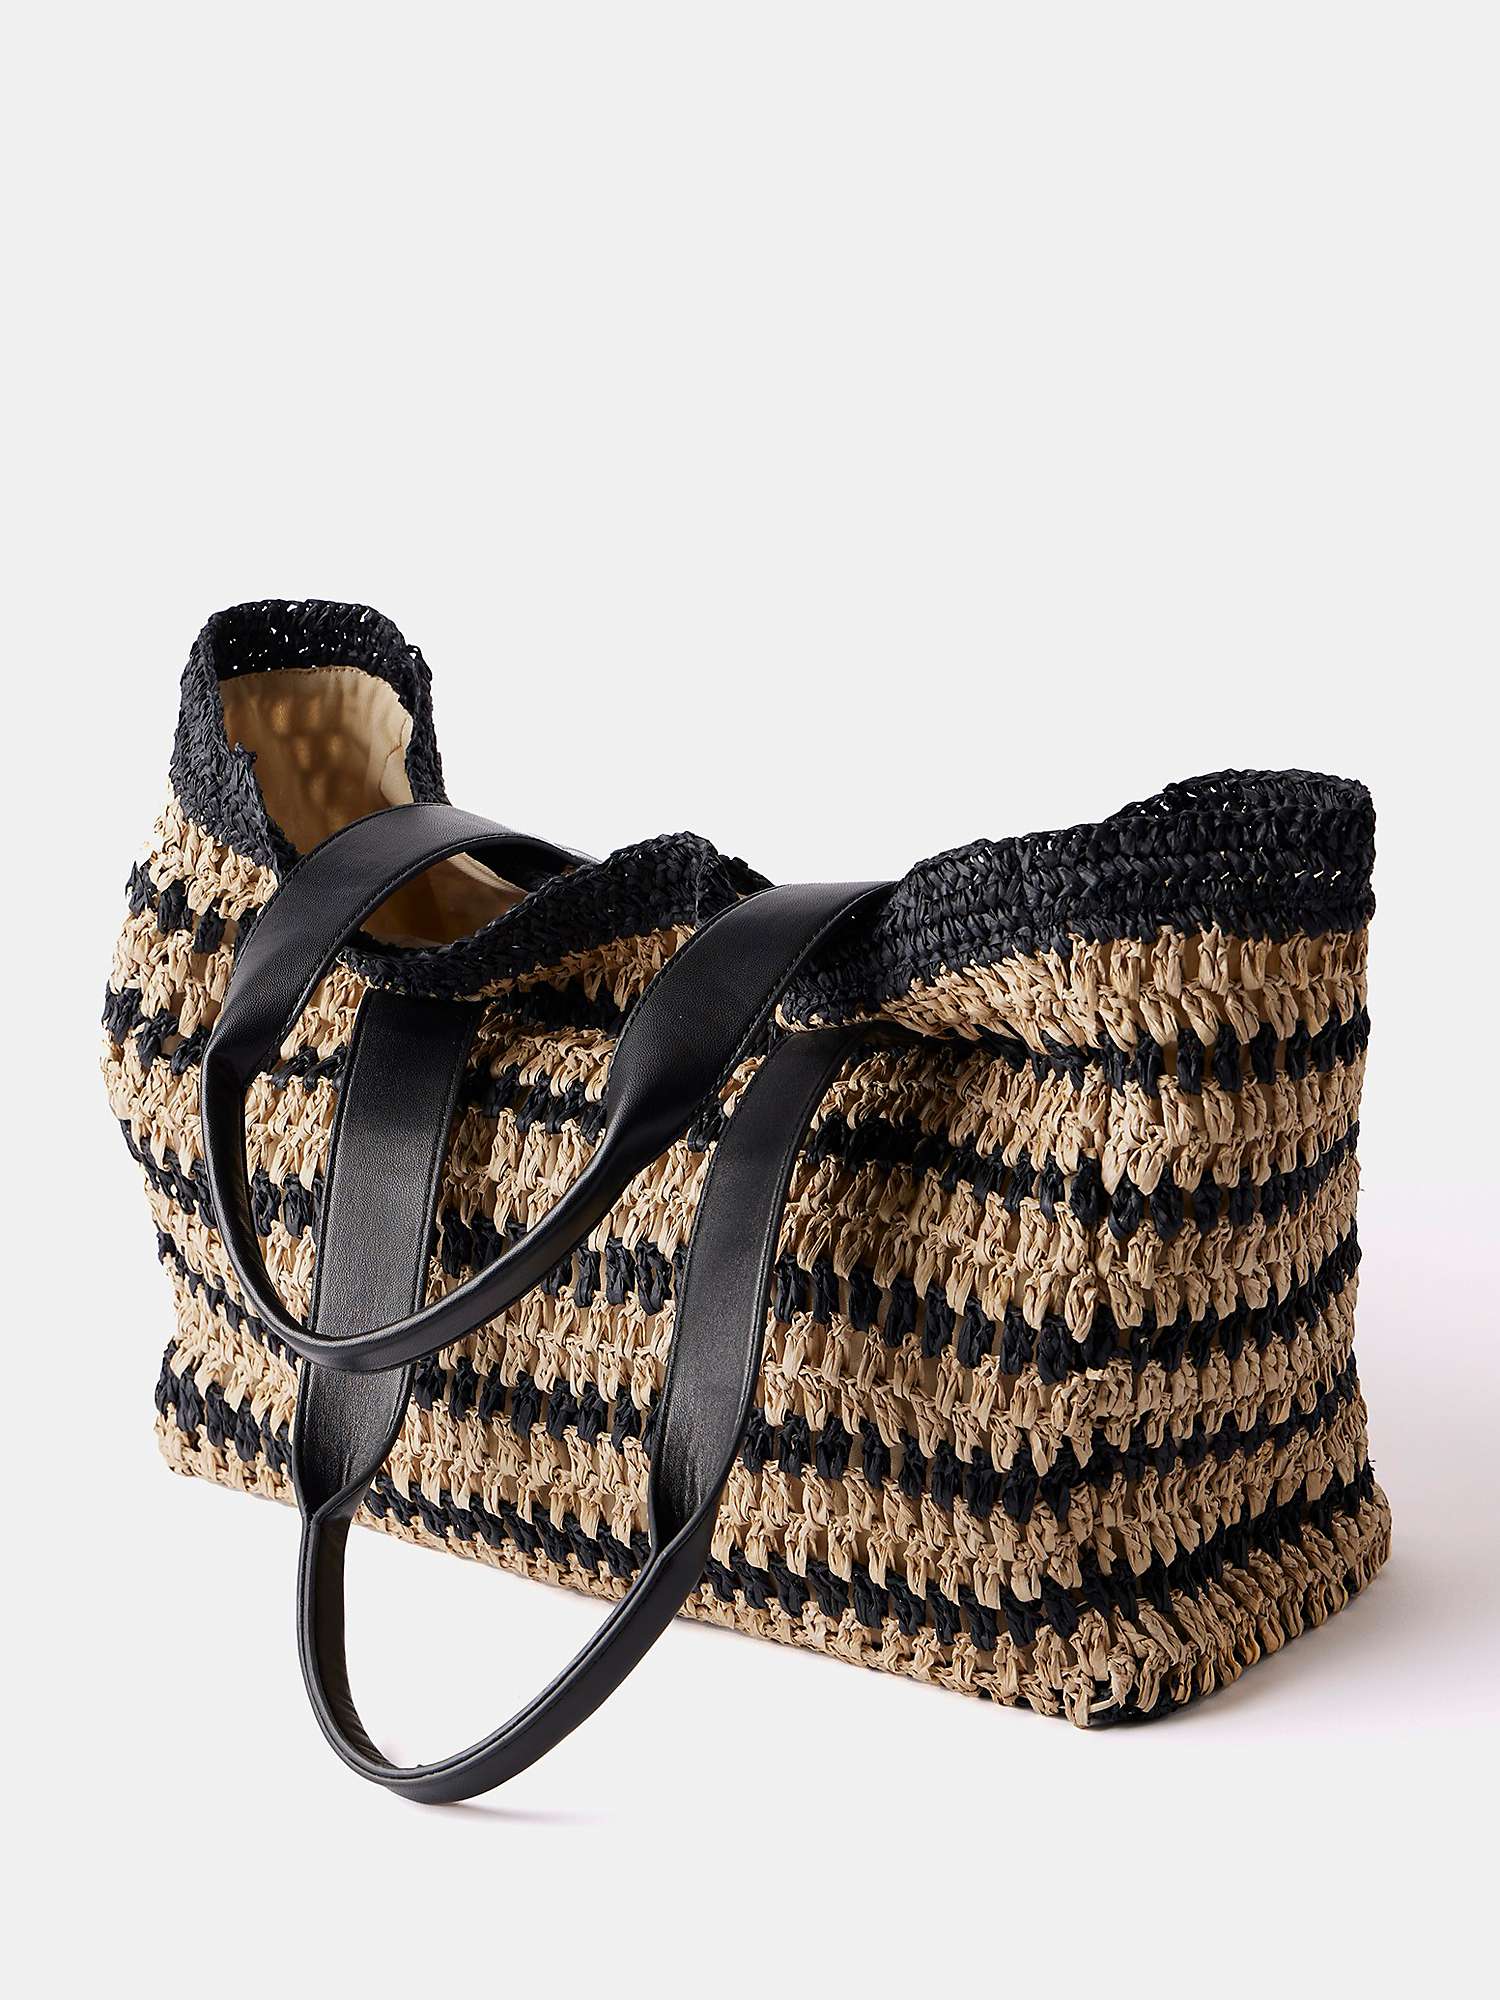 Buy Mint Velvet Woven Striped Tote Bag, Black/Natural Online at johnlewis.com